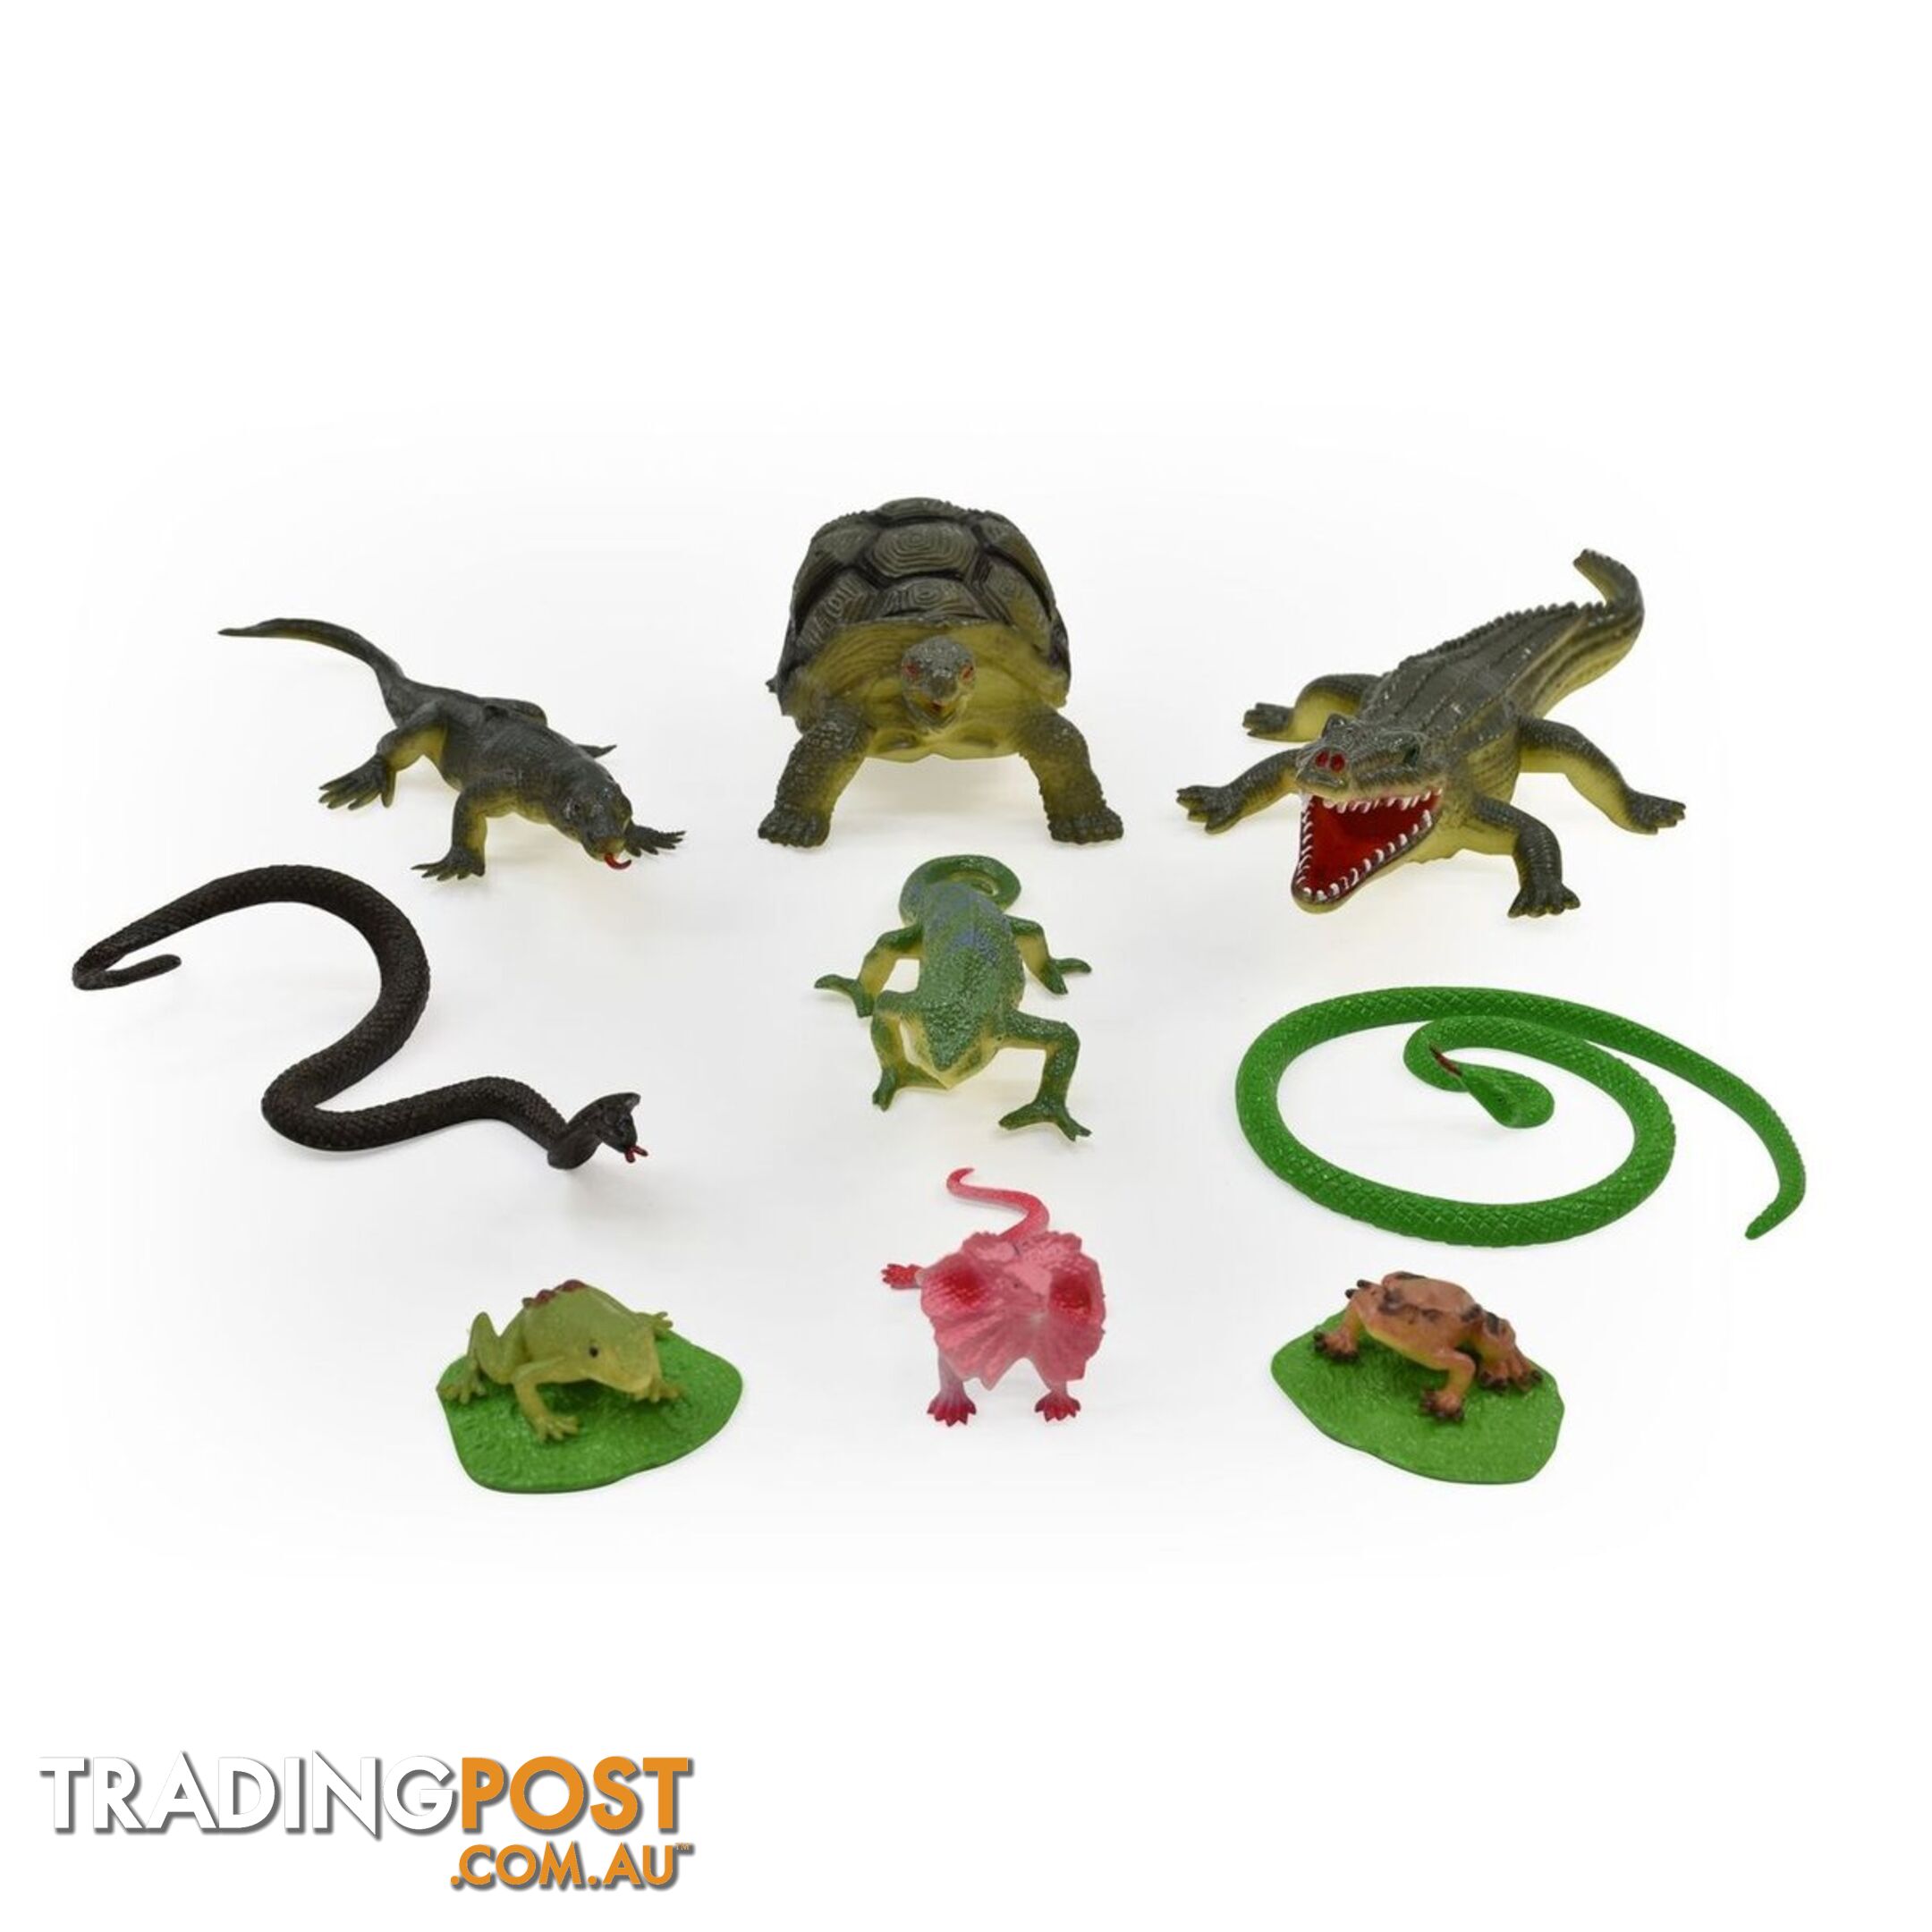 Reptile World 9 Piece Animal Set Art64268 - 5018621210475